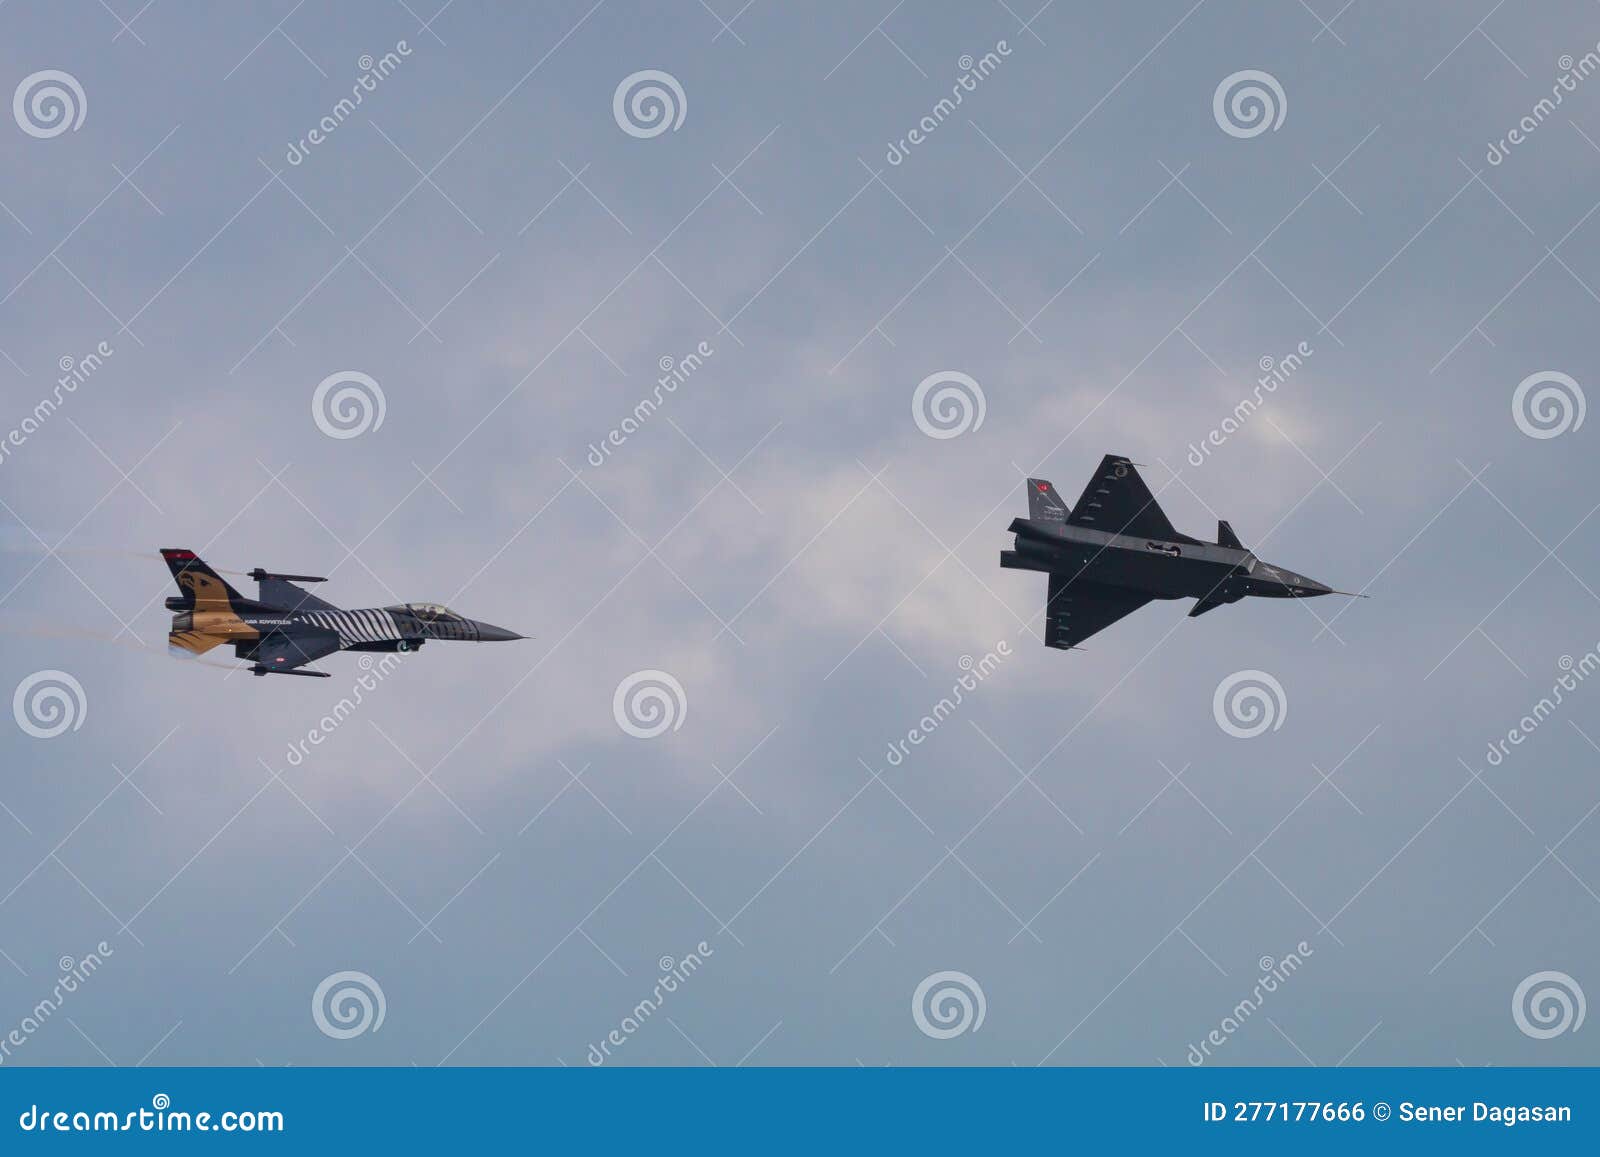 Soloturk and Bayraktar Kizilelma on the Sky Editorial Photo - Image of ...